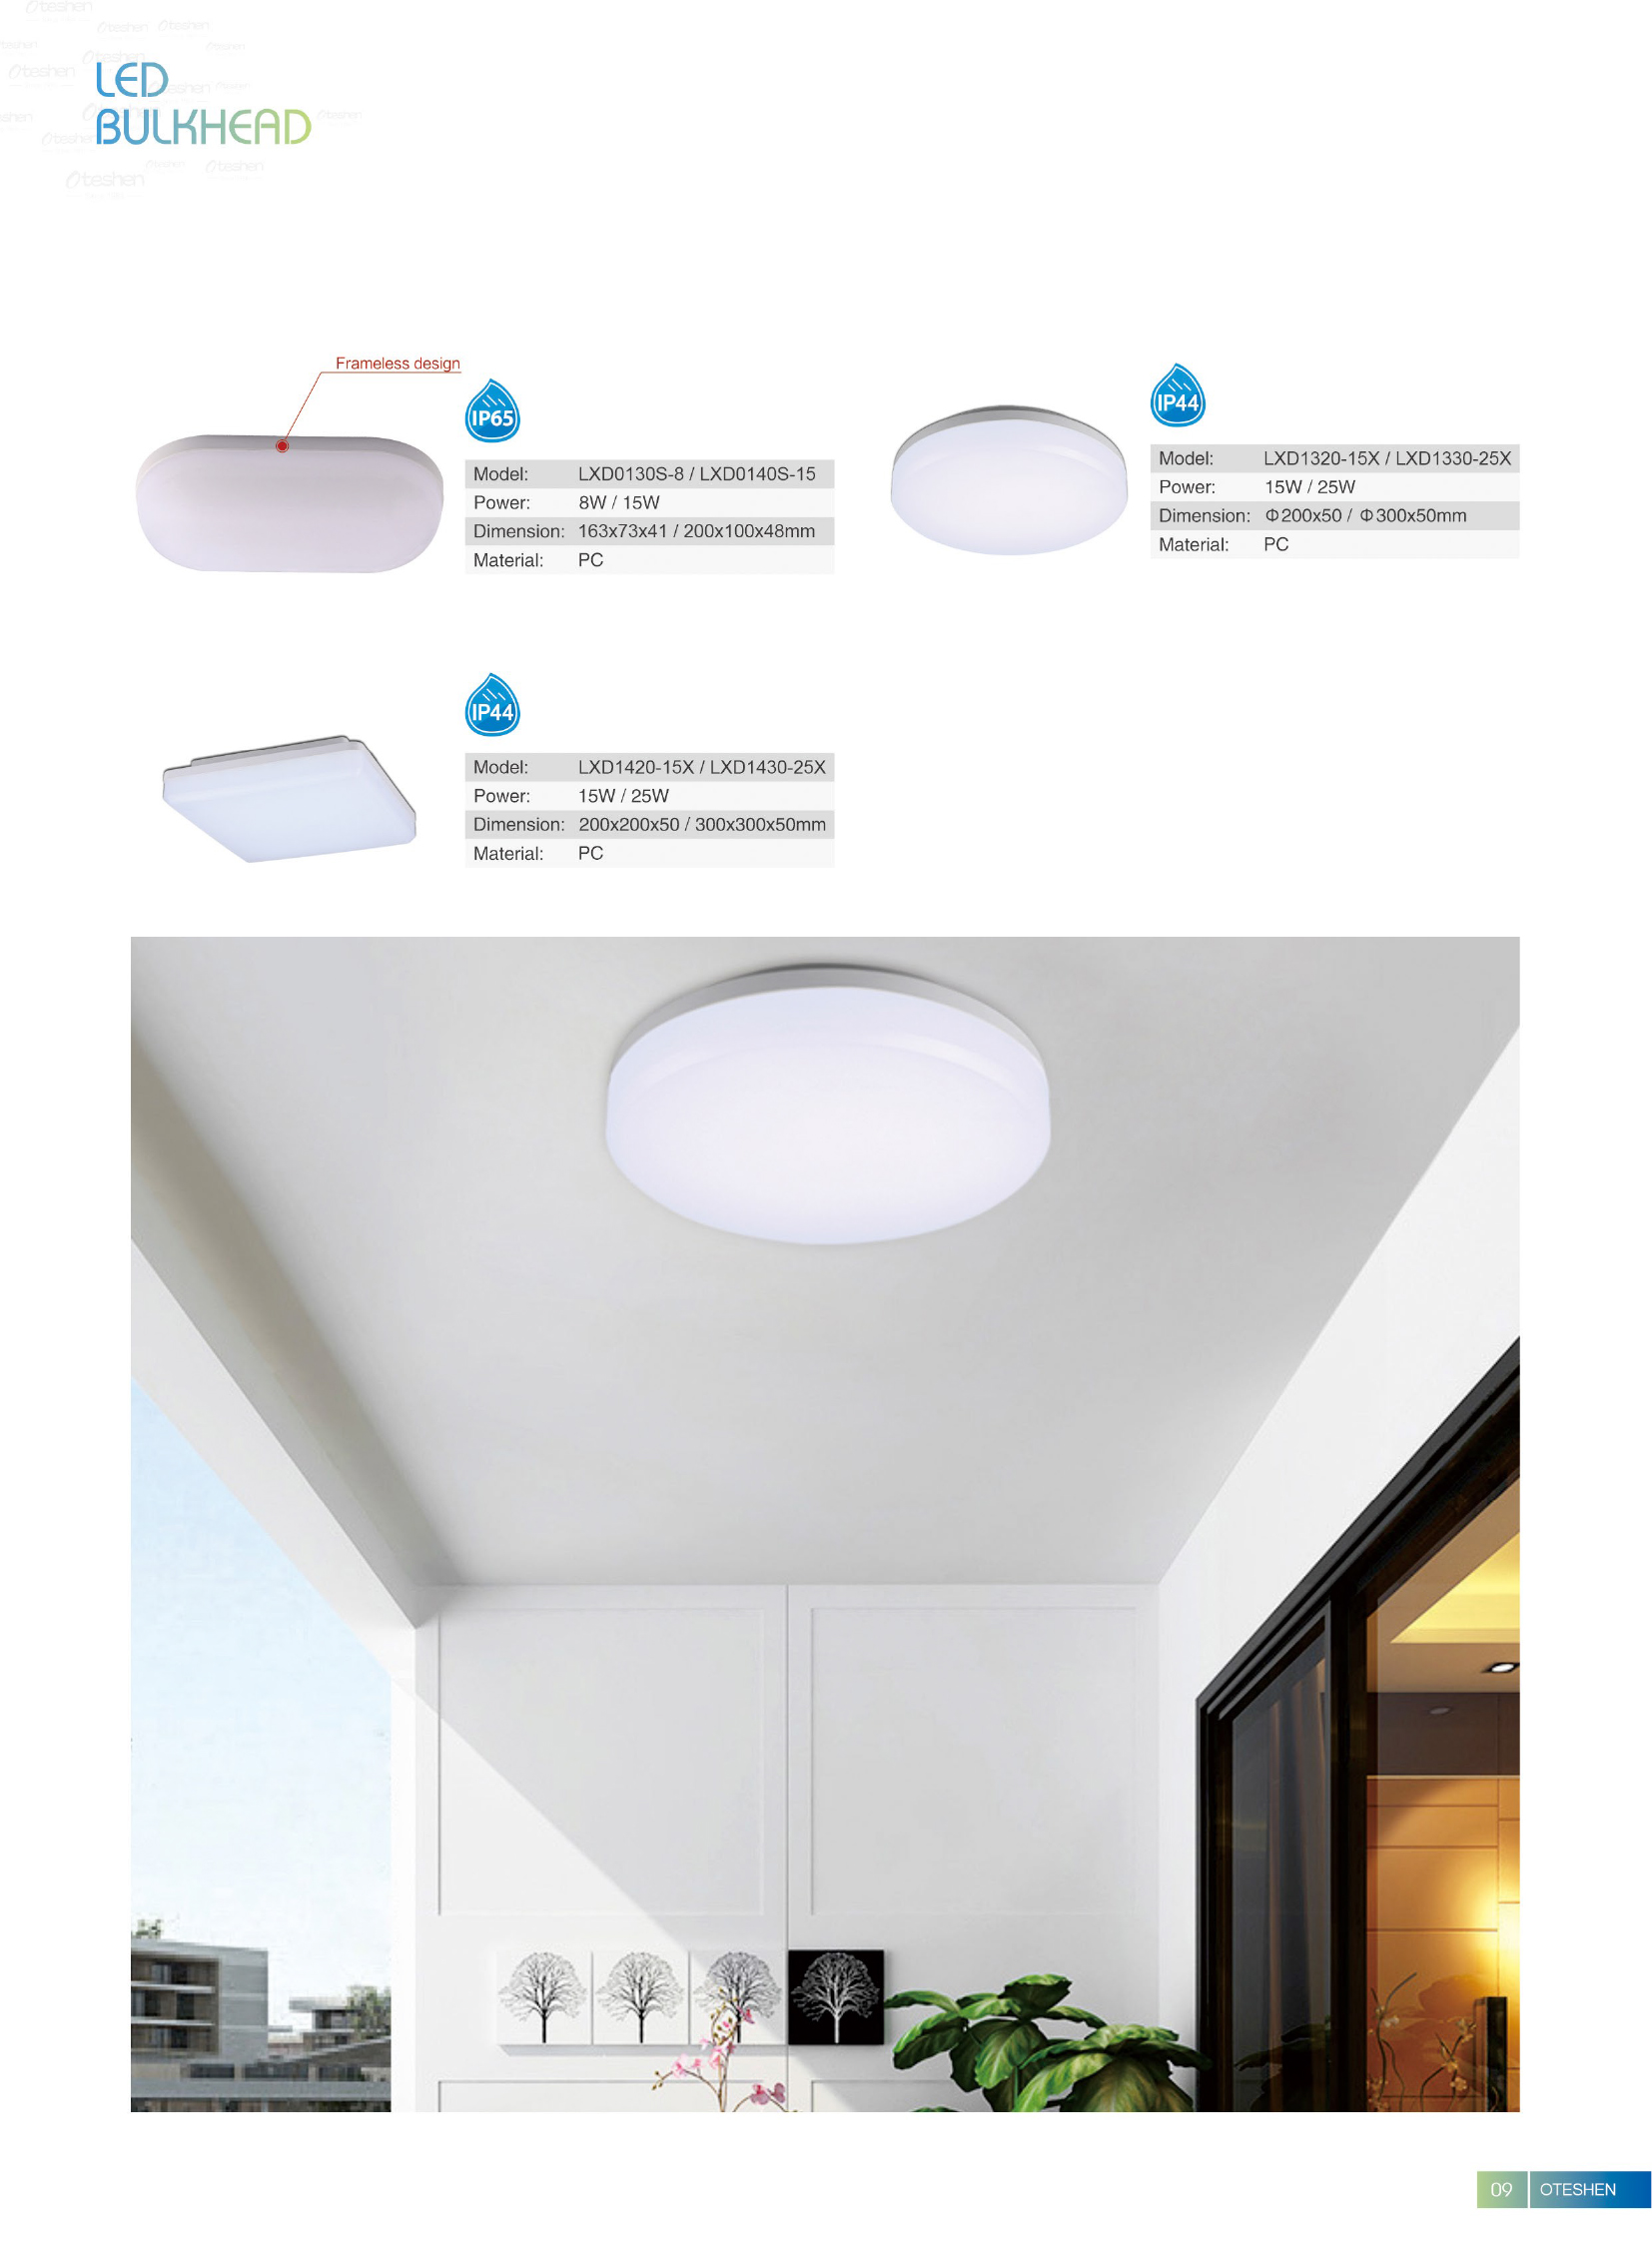 Good quality product led bulkhead light outdoor waterproof bulkhead lamp 15w 25w bulkhead led light waterproof ceiling light